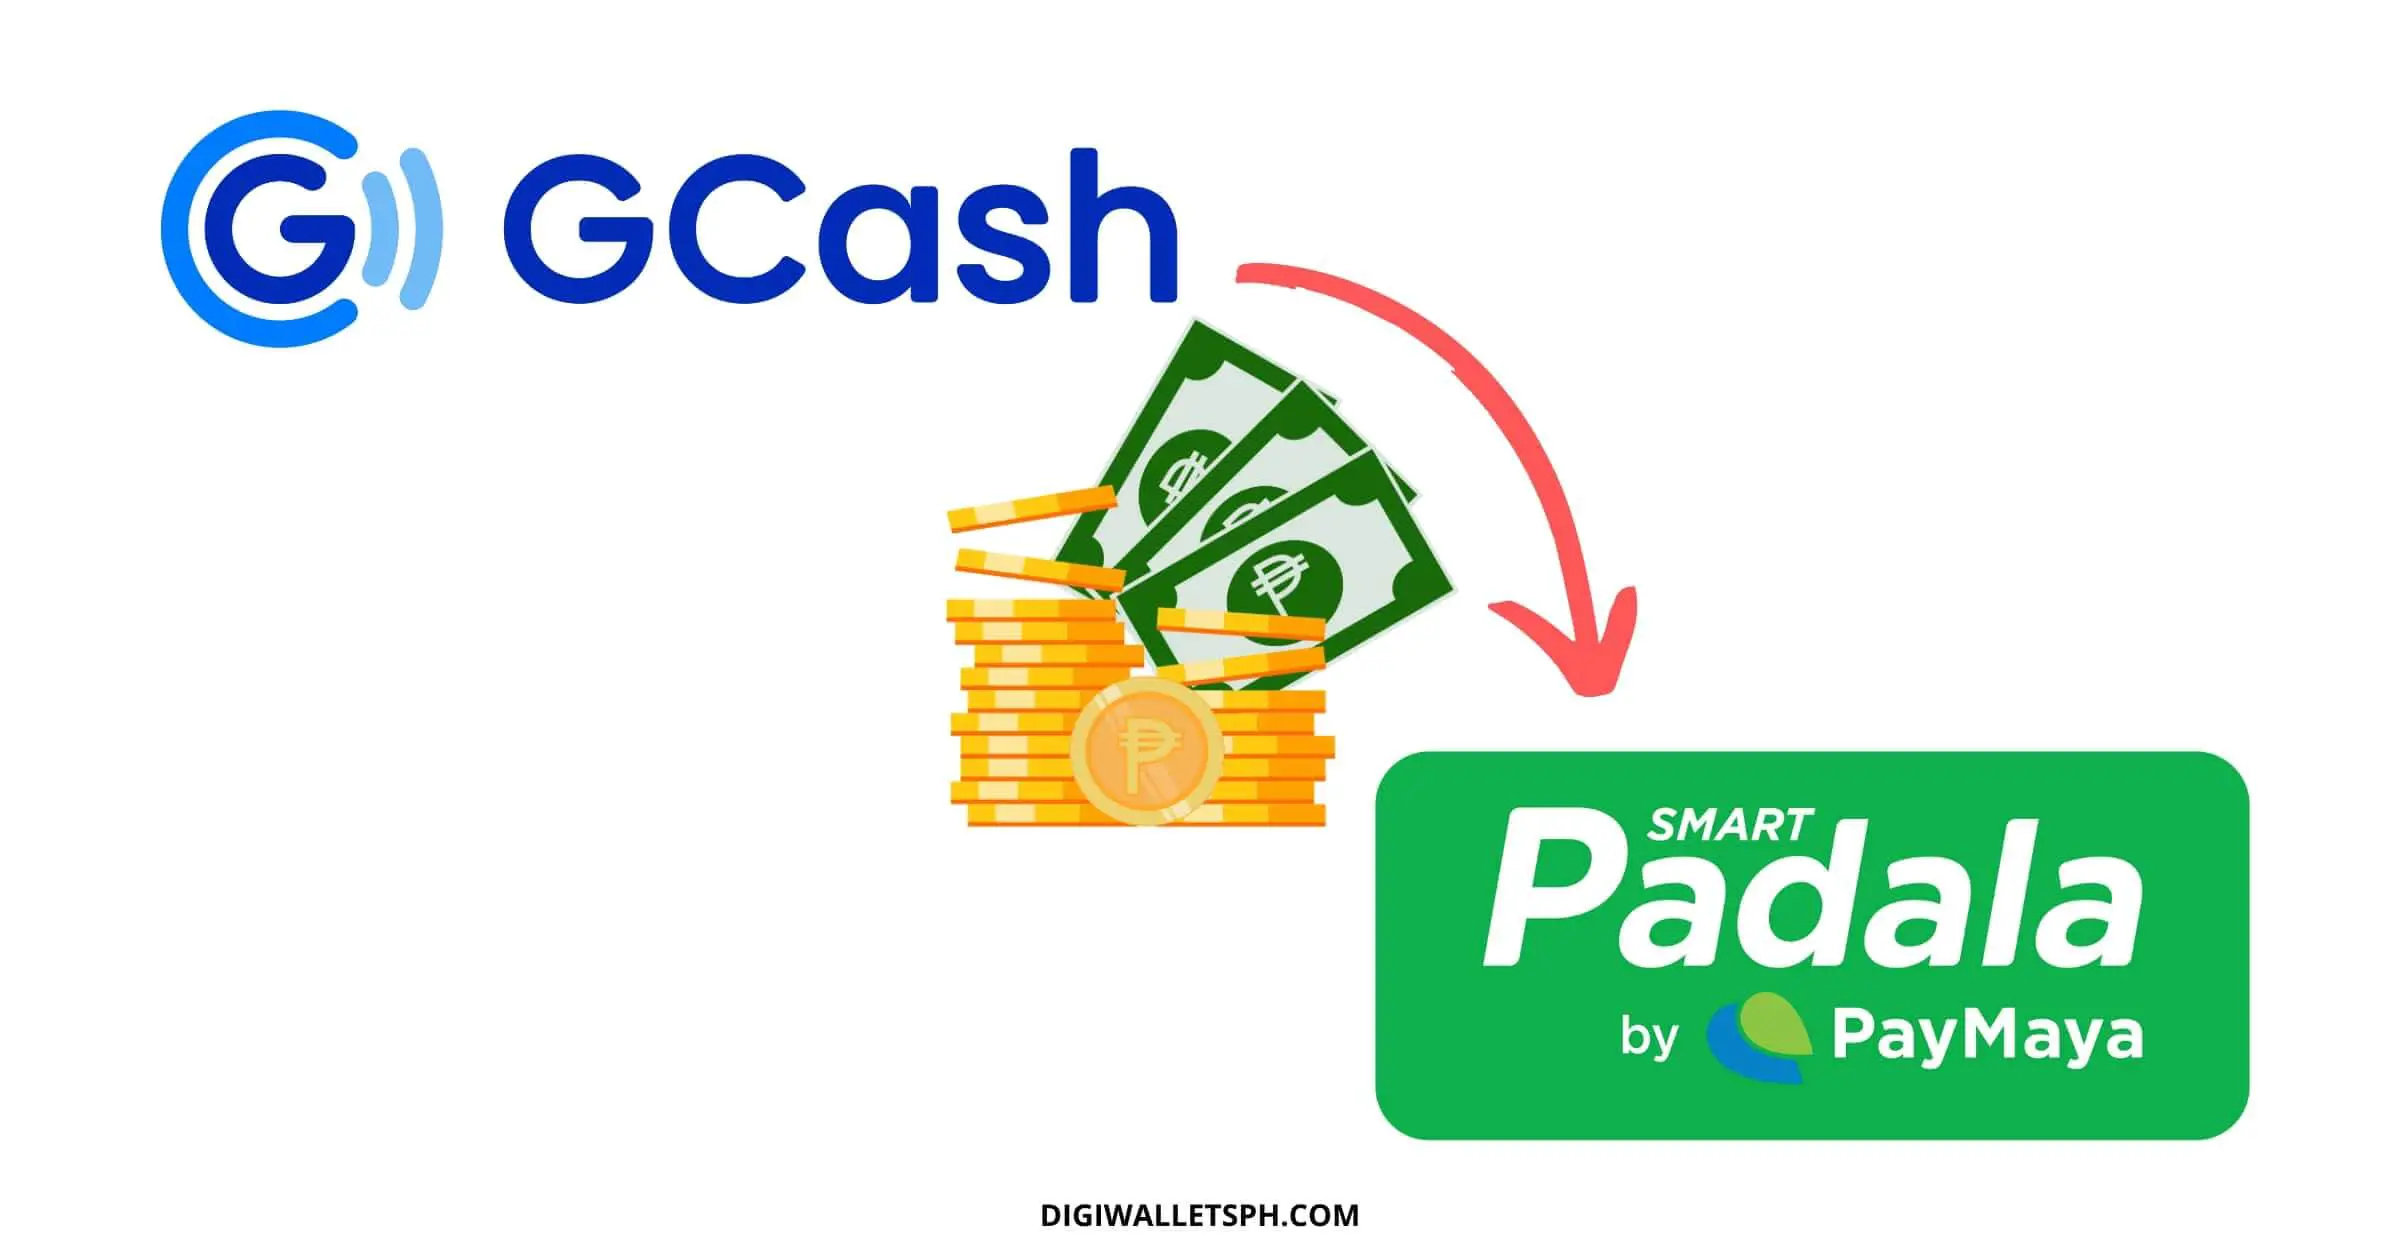 How to send money from GCash to Smart Padala